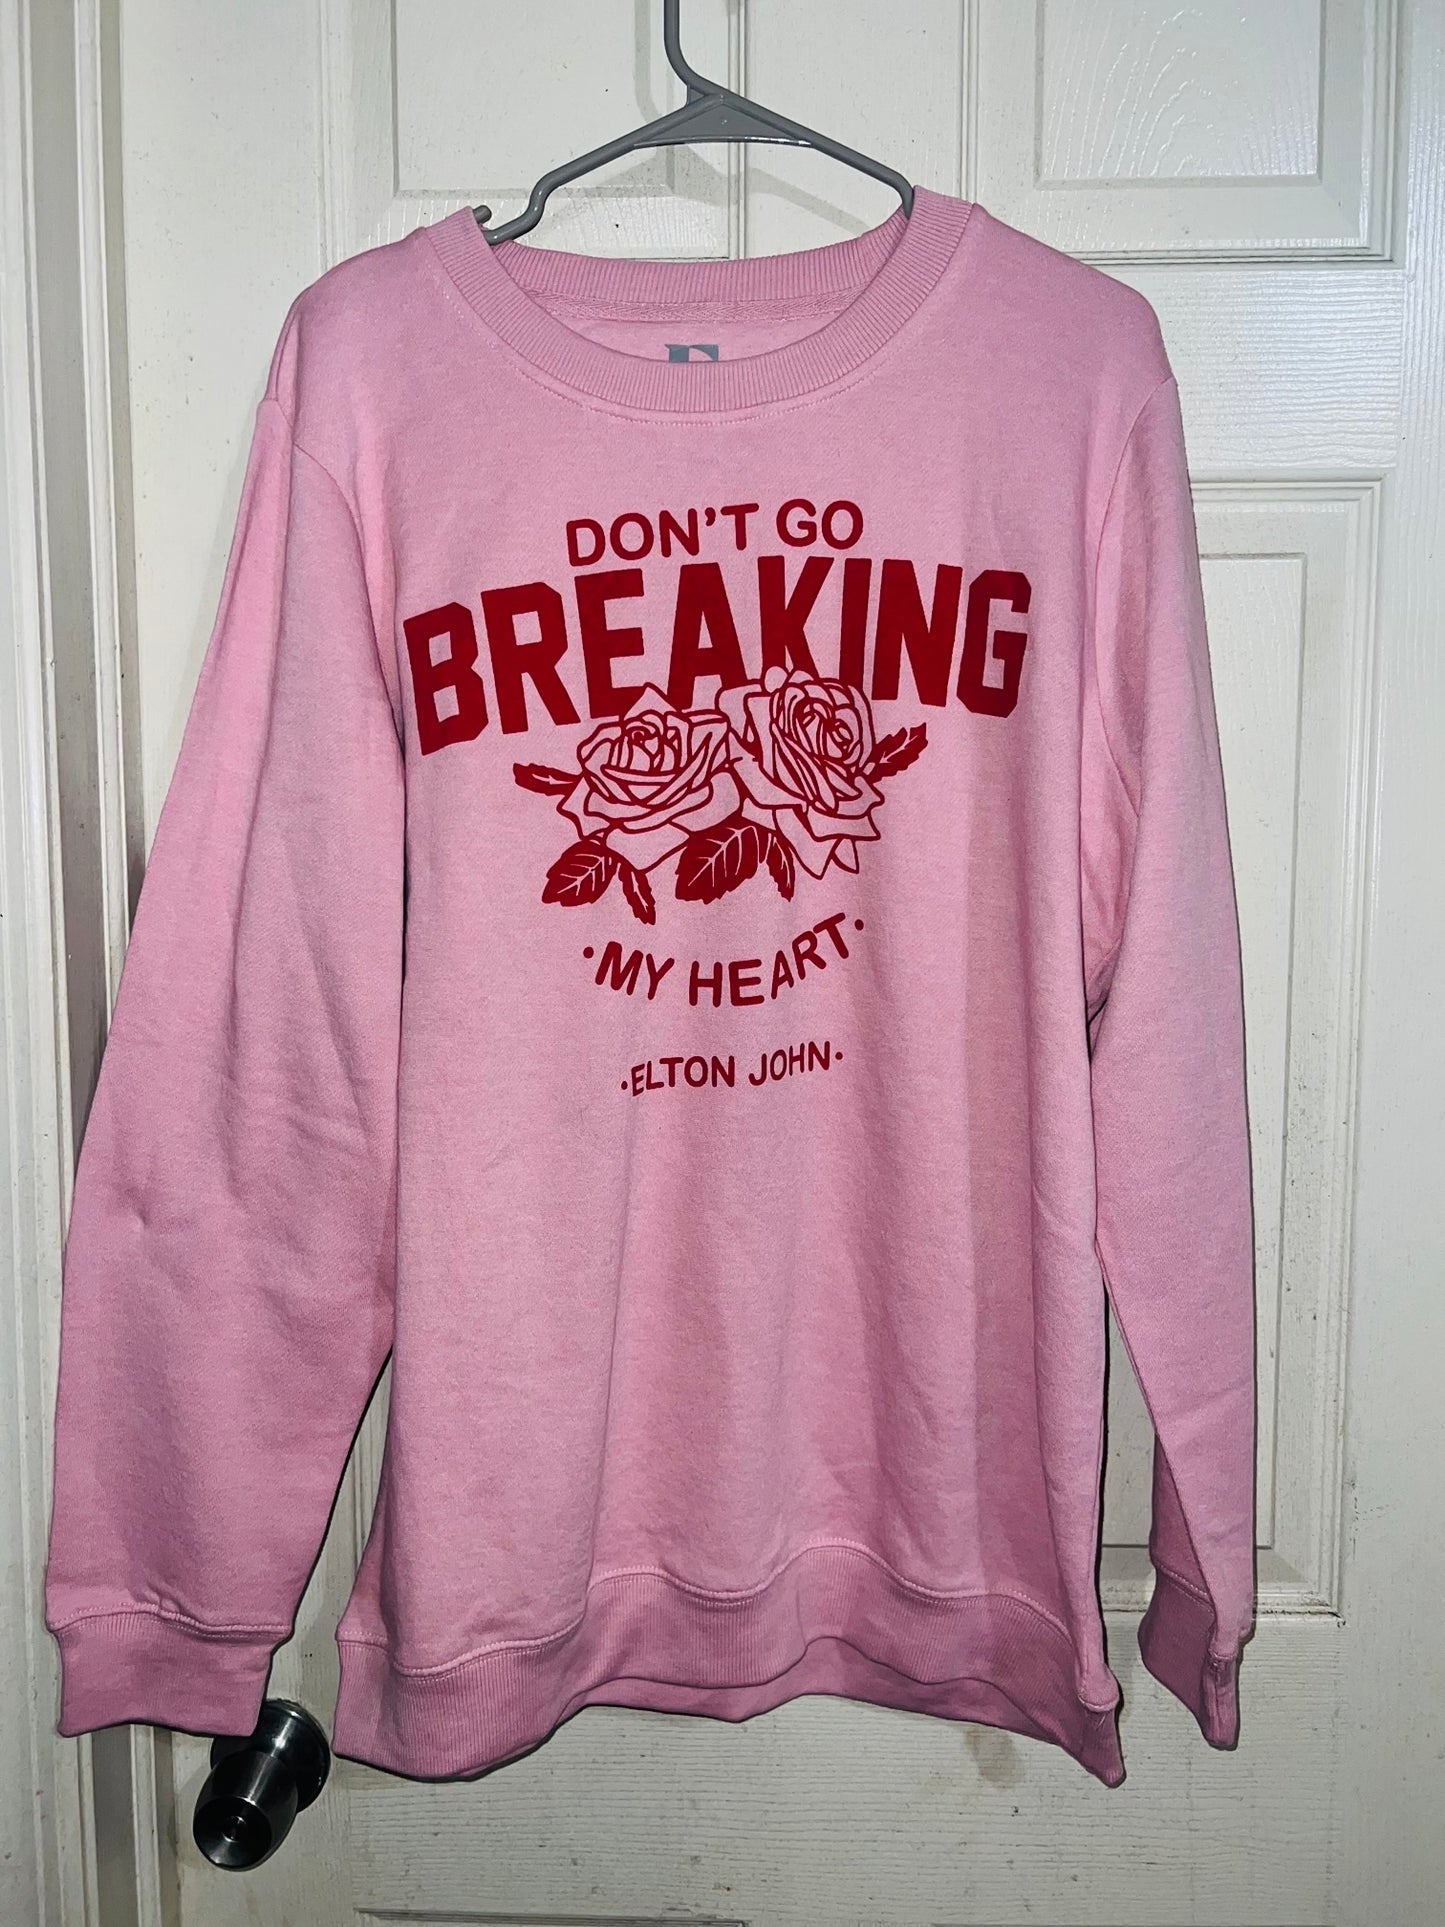 Elton John “Don’t go breaking my Heart” Oversized Distressed Sweatshirt